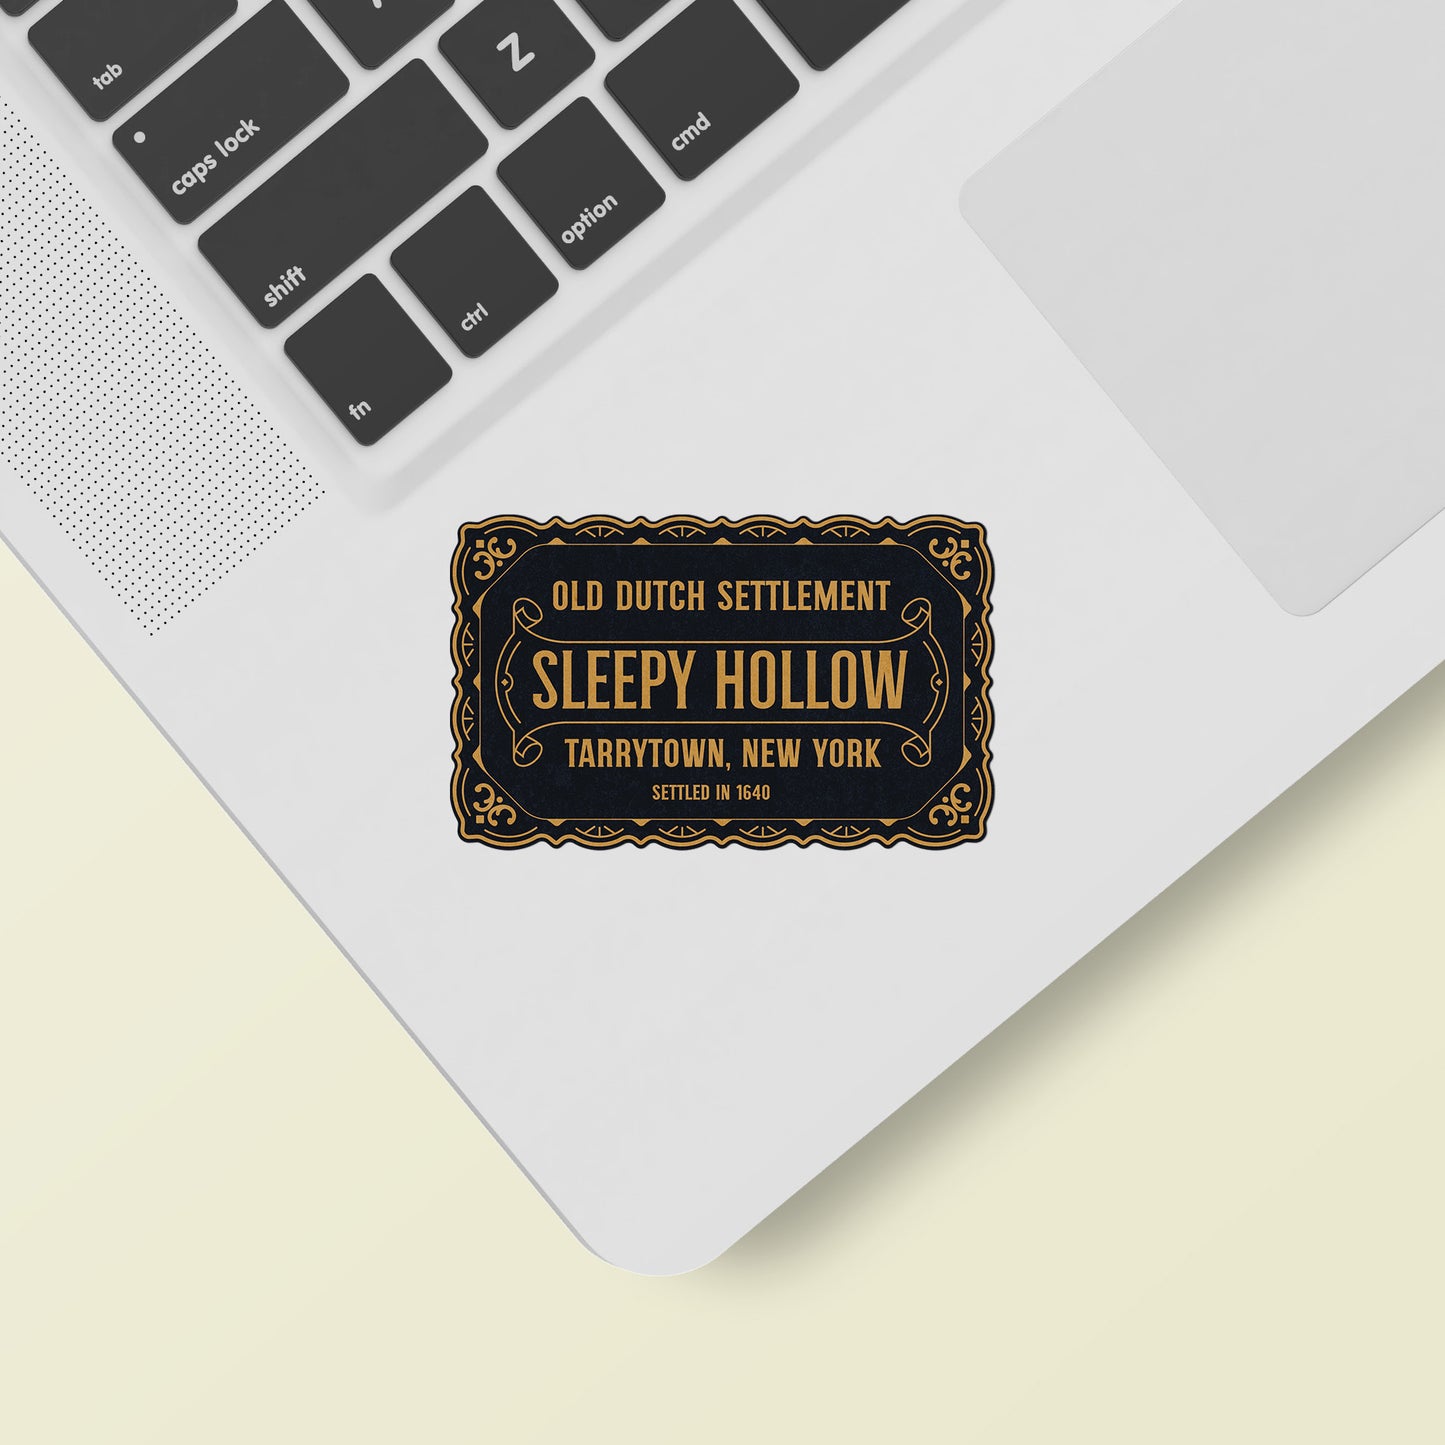 Sleepy Hollow Vintage Travel Label Vinyl Sticker